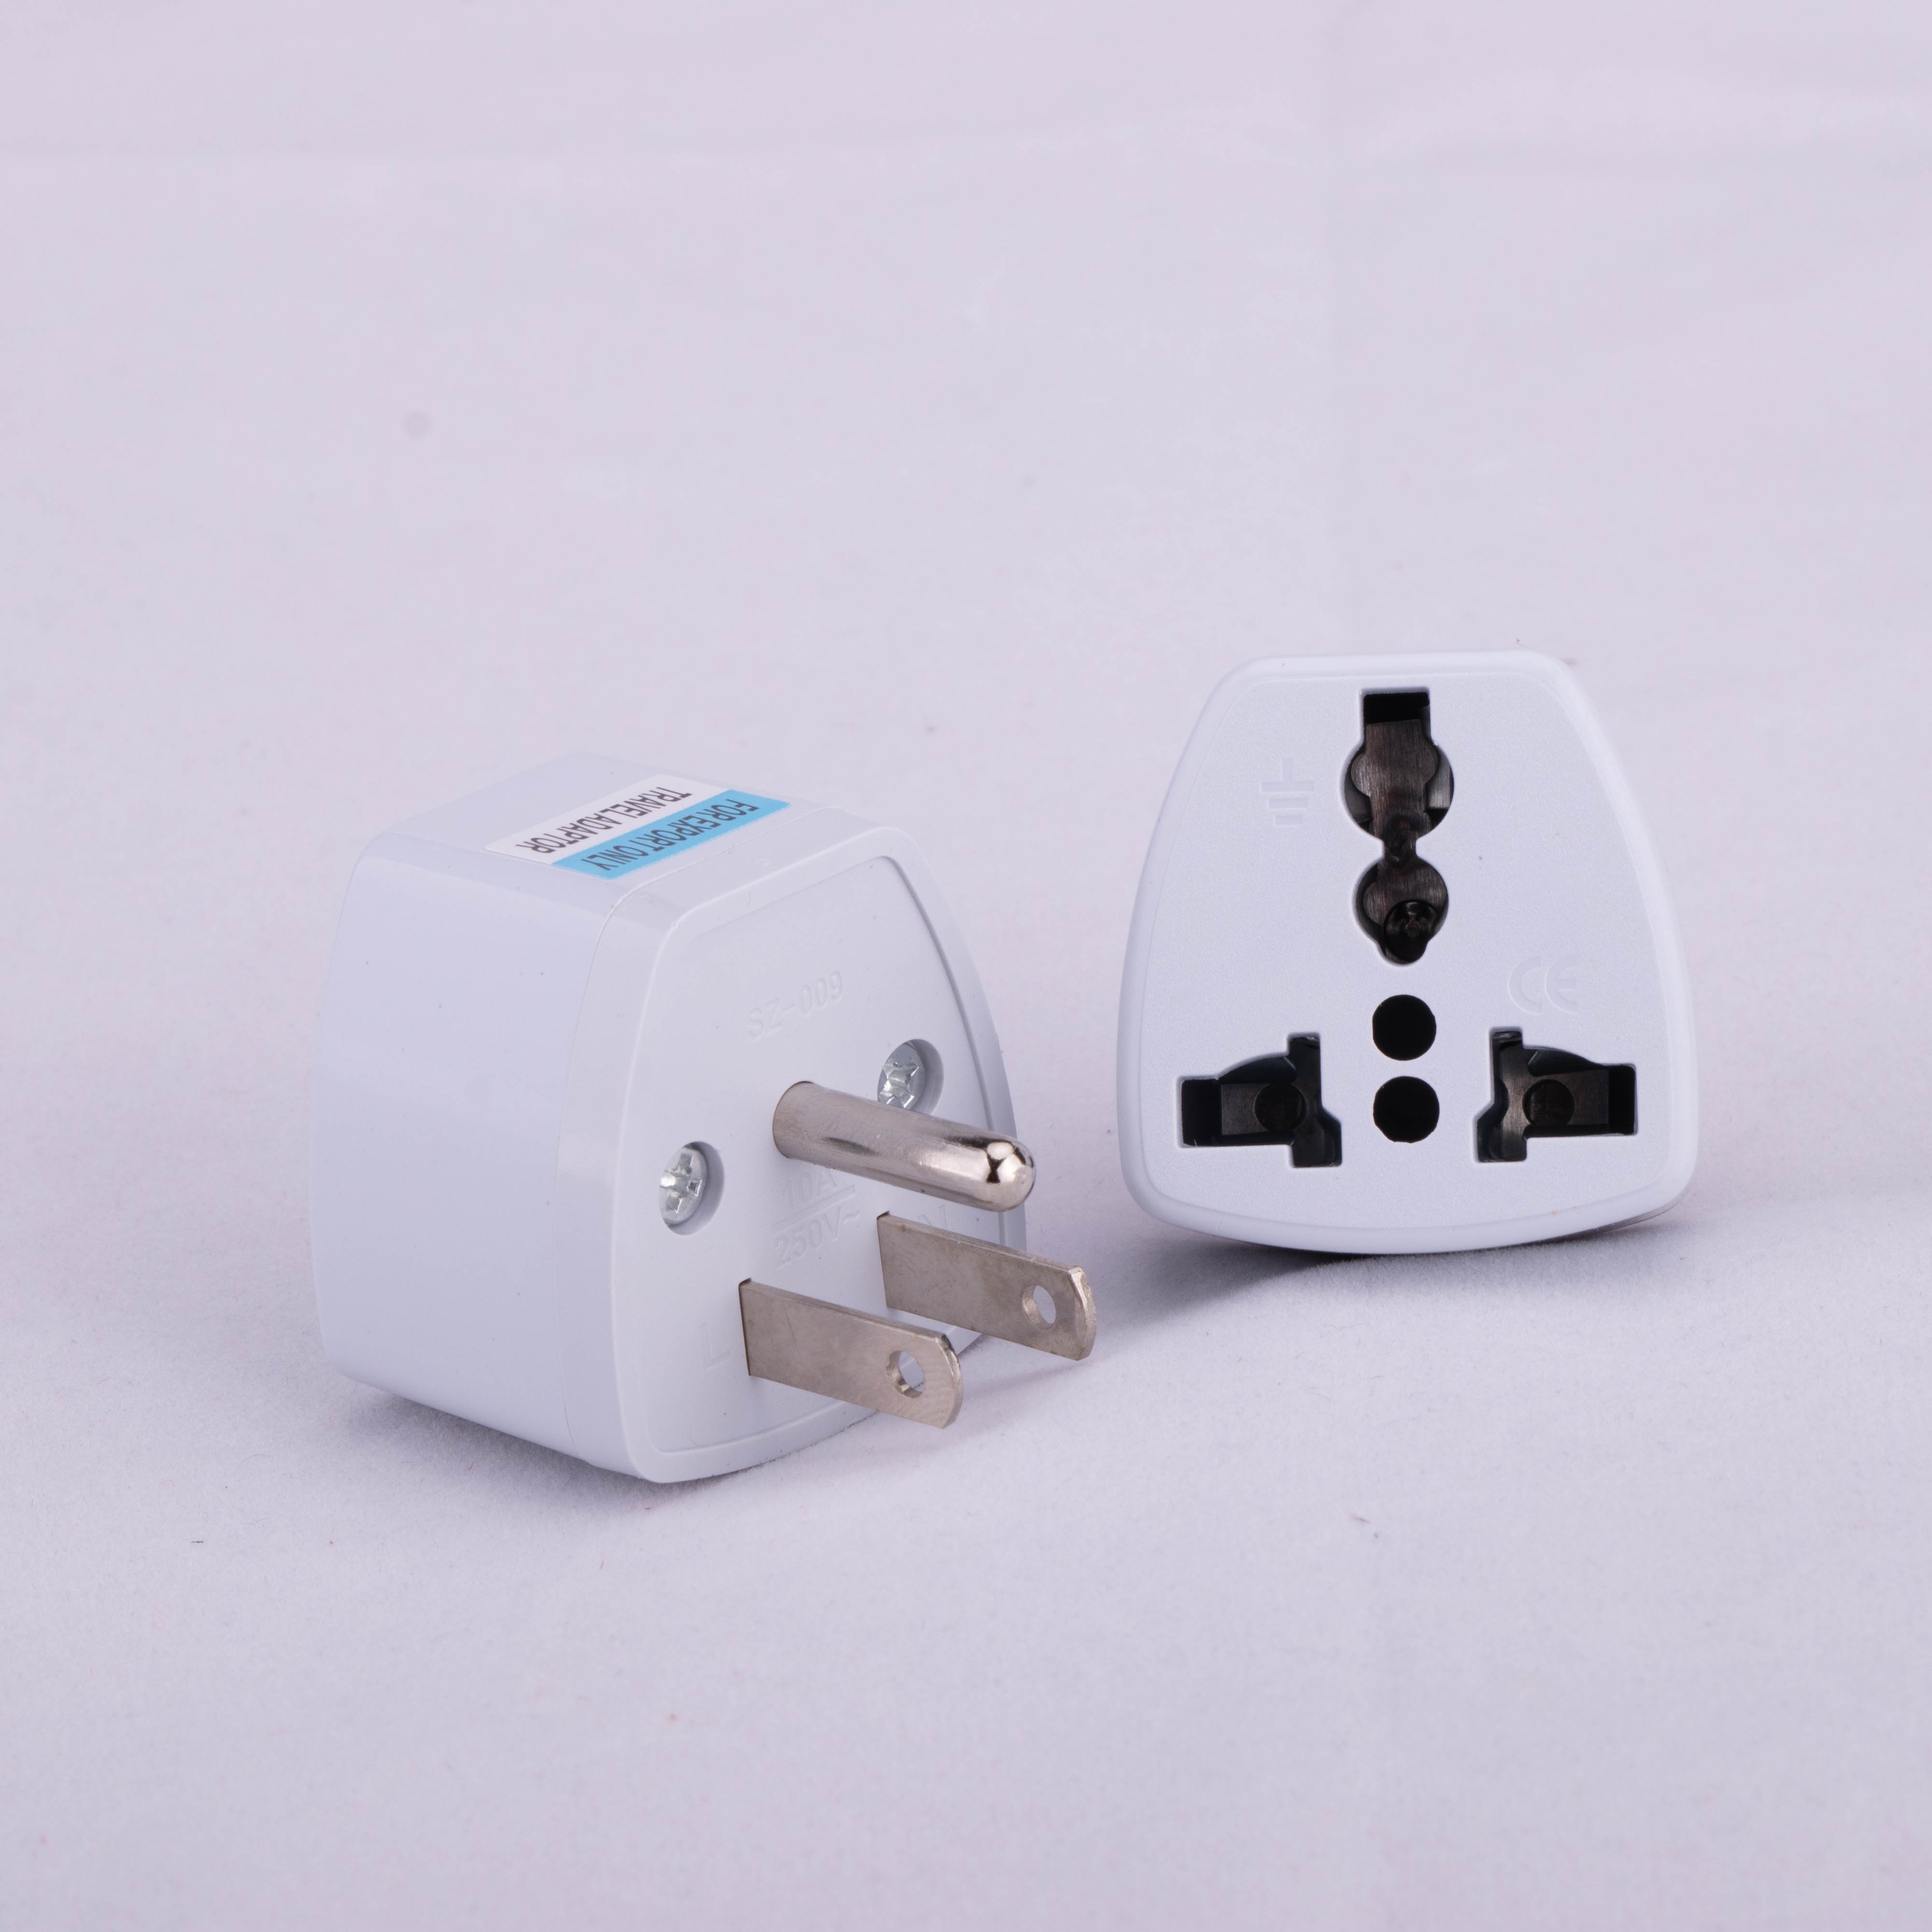 1 Pc Universal to UK Plug Adapter Type G Travel AC Converter Dubai